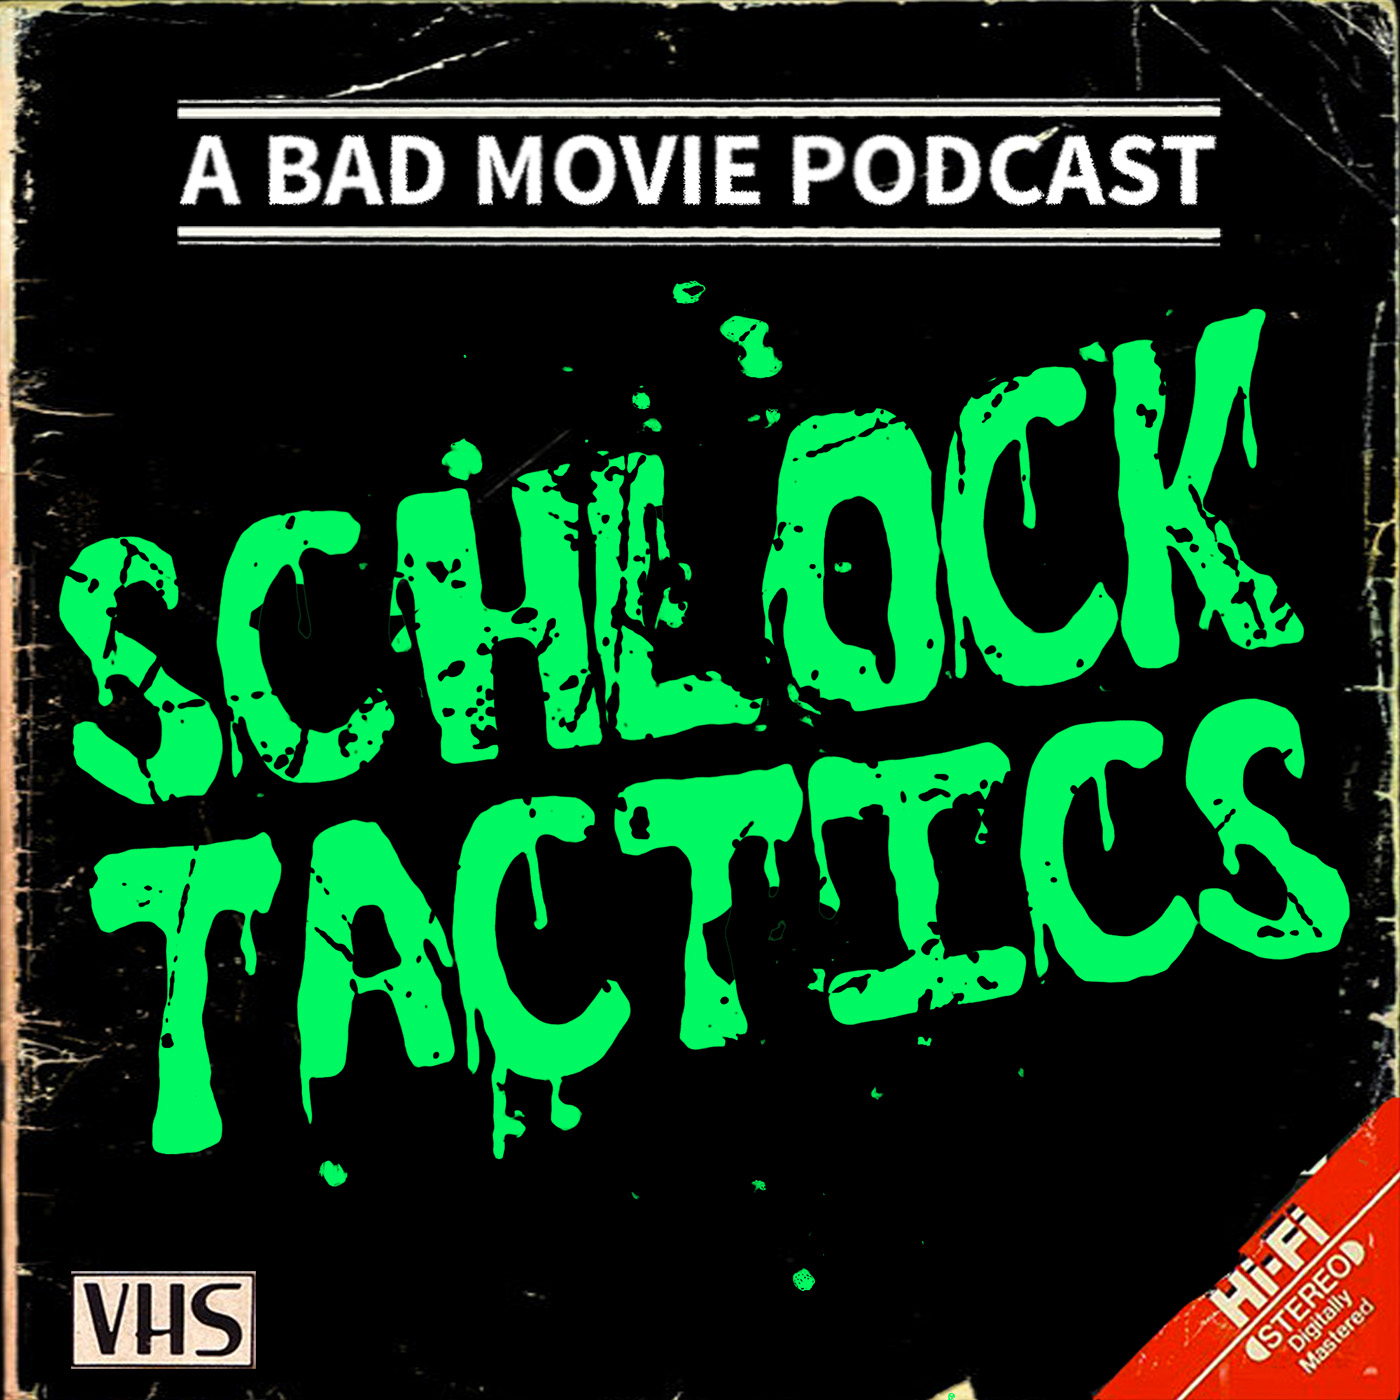 Schlock Tactics